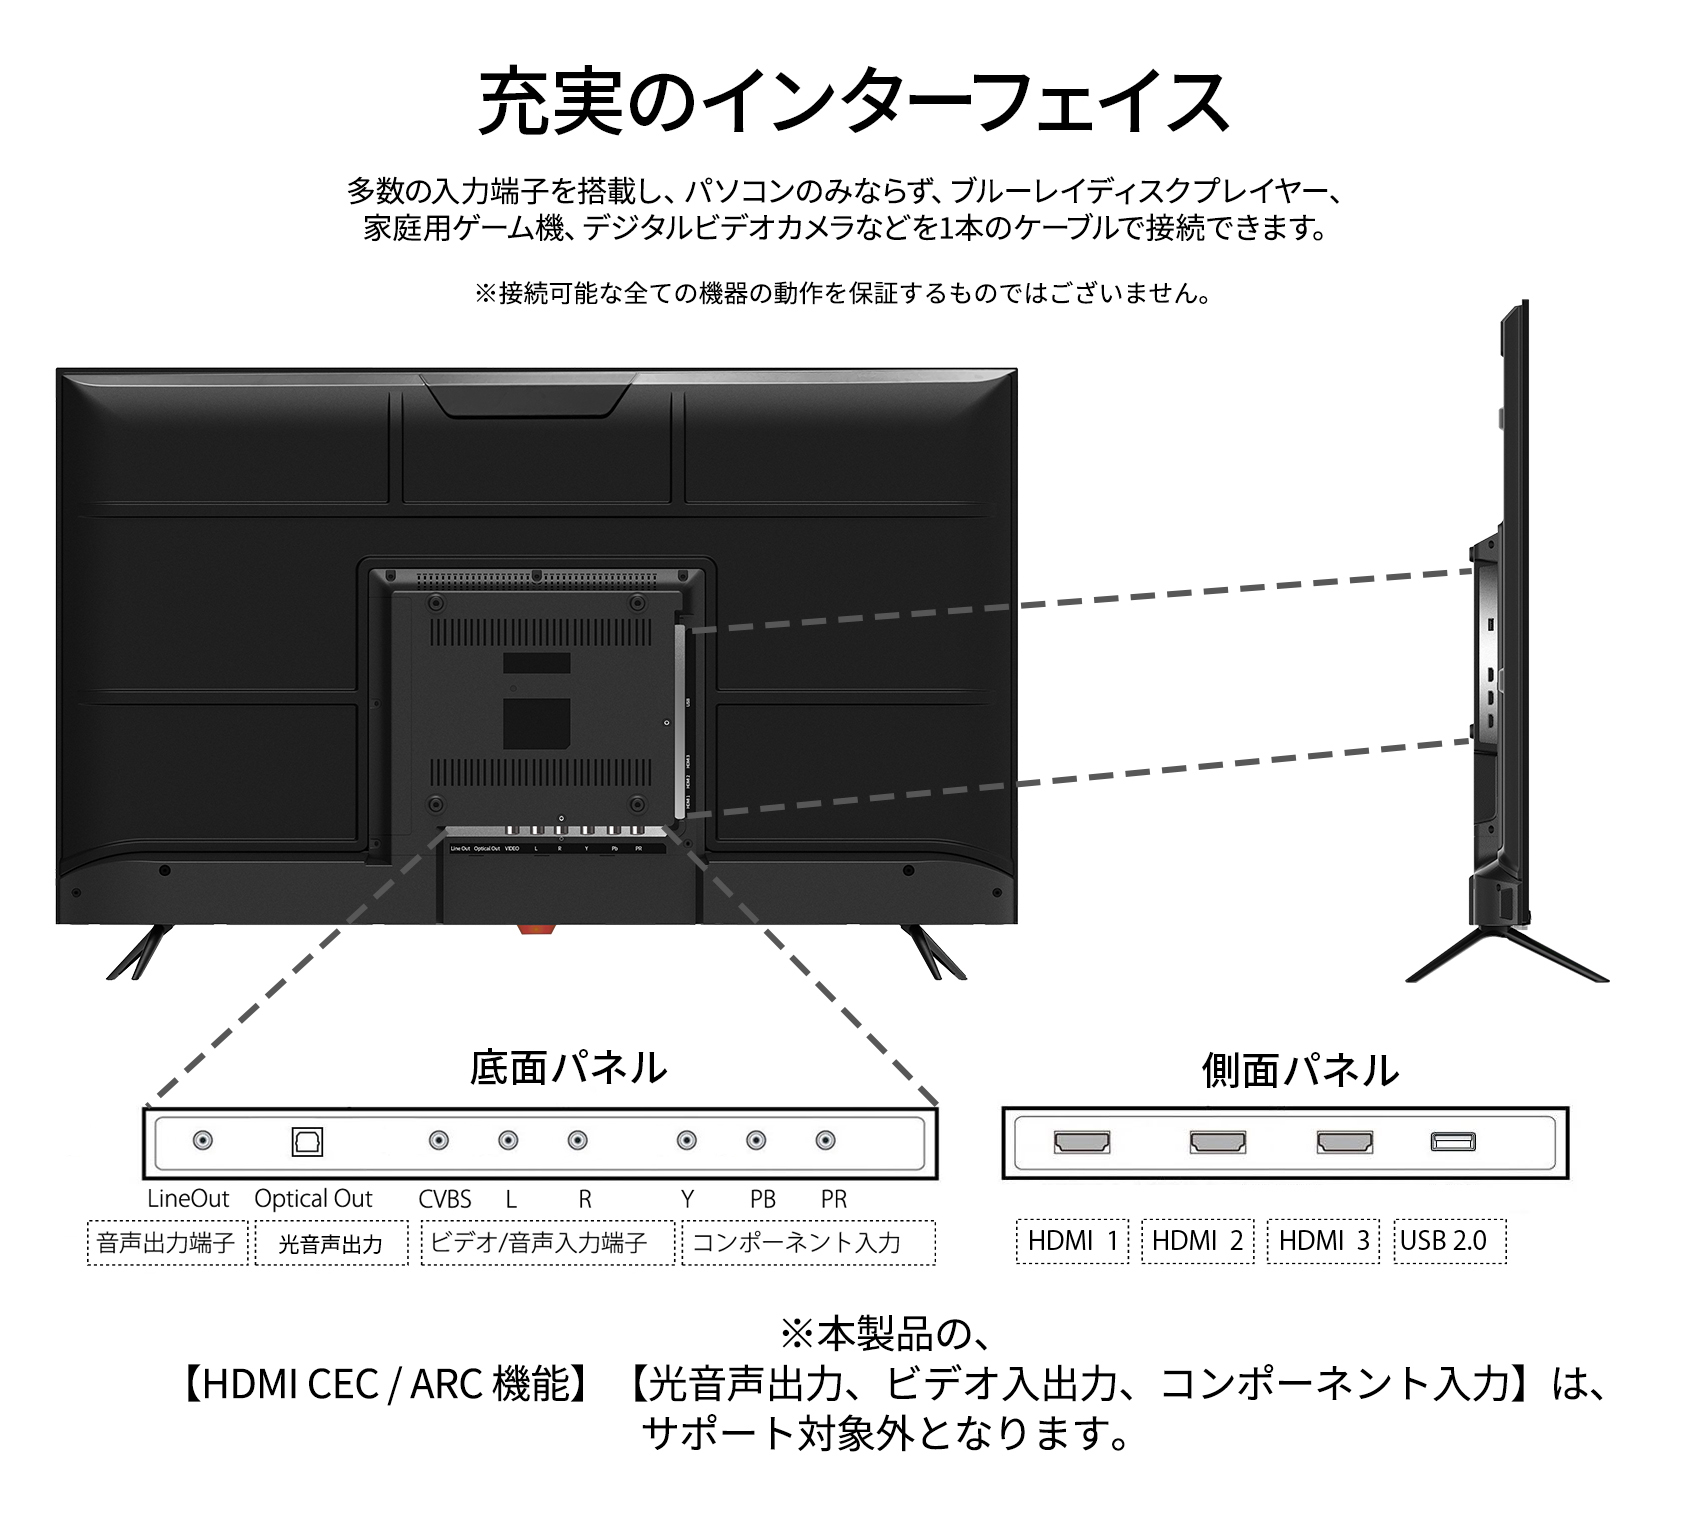 JAPANNEXT 55インチ 大型4K(3840x2160)液晶ディスプレイ JN 